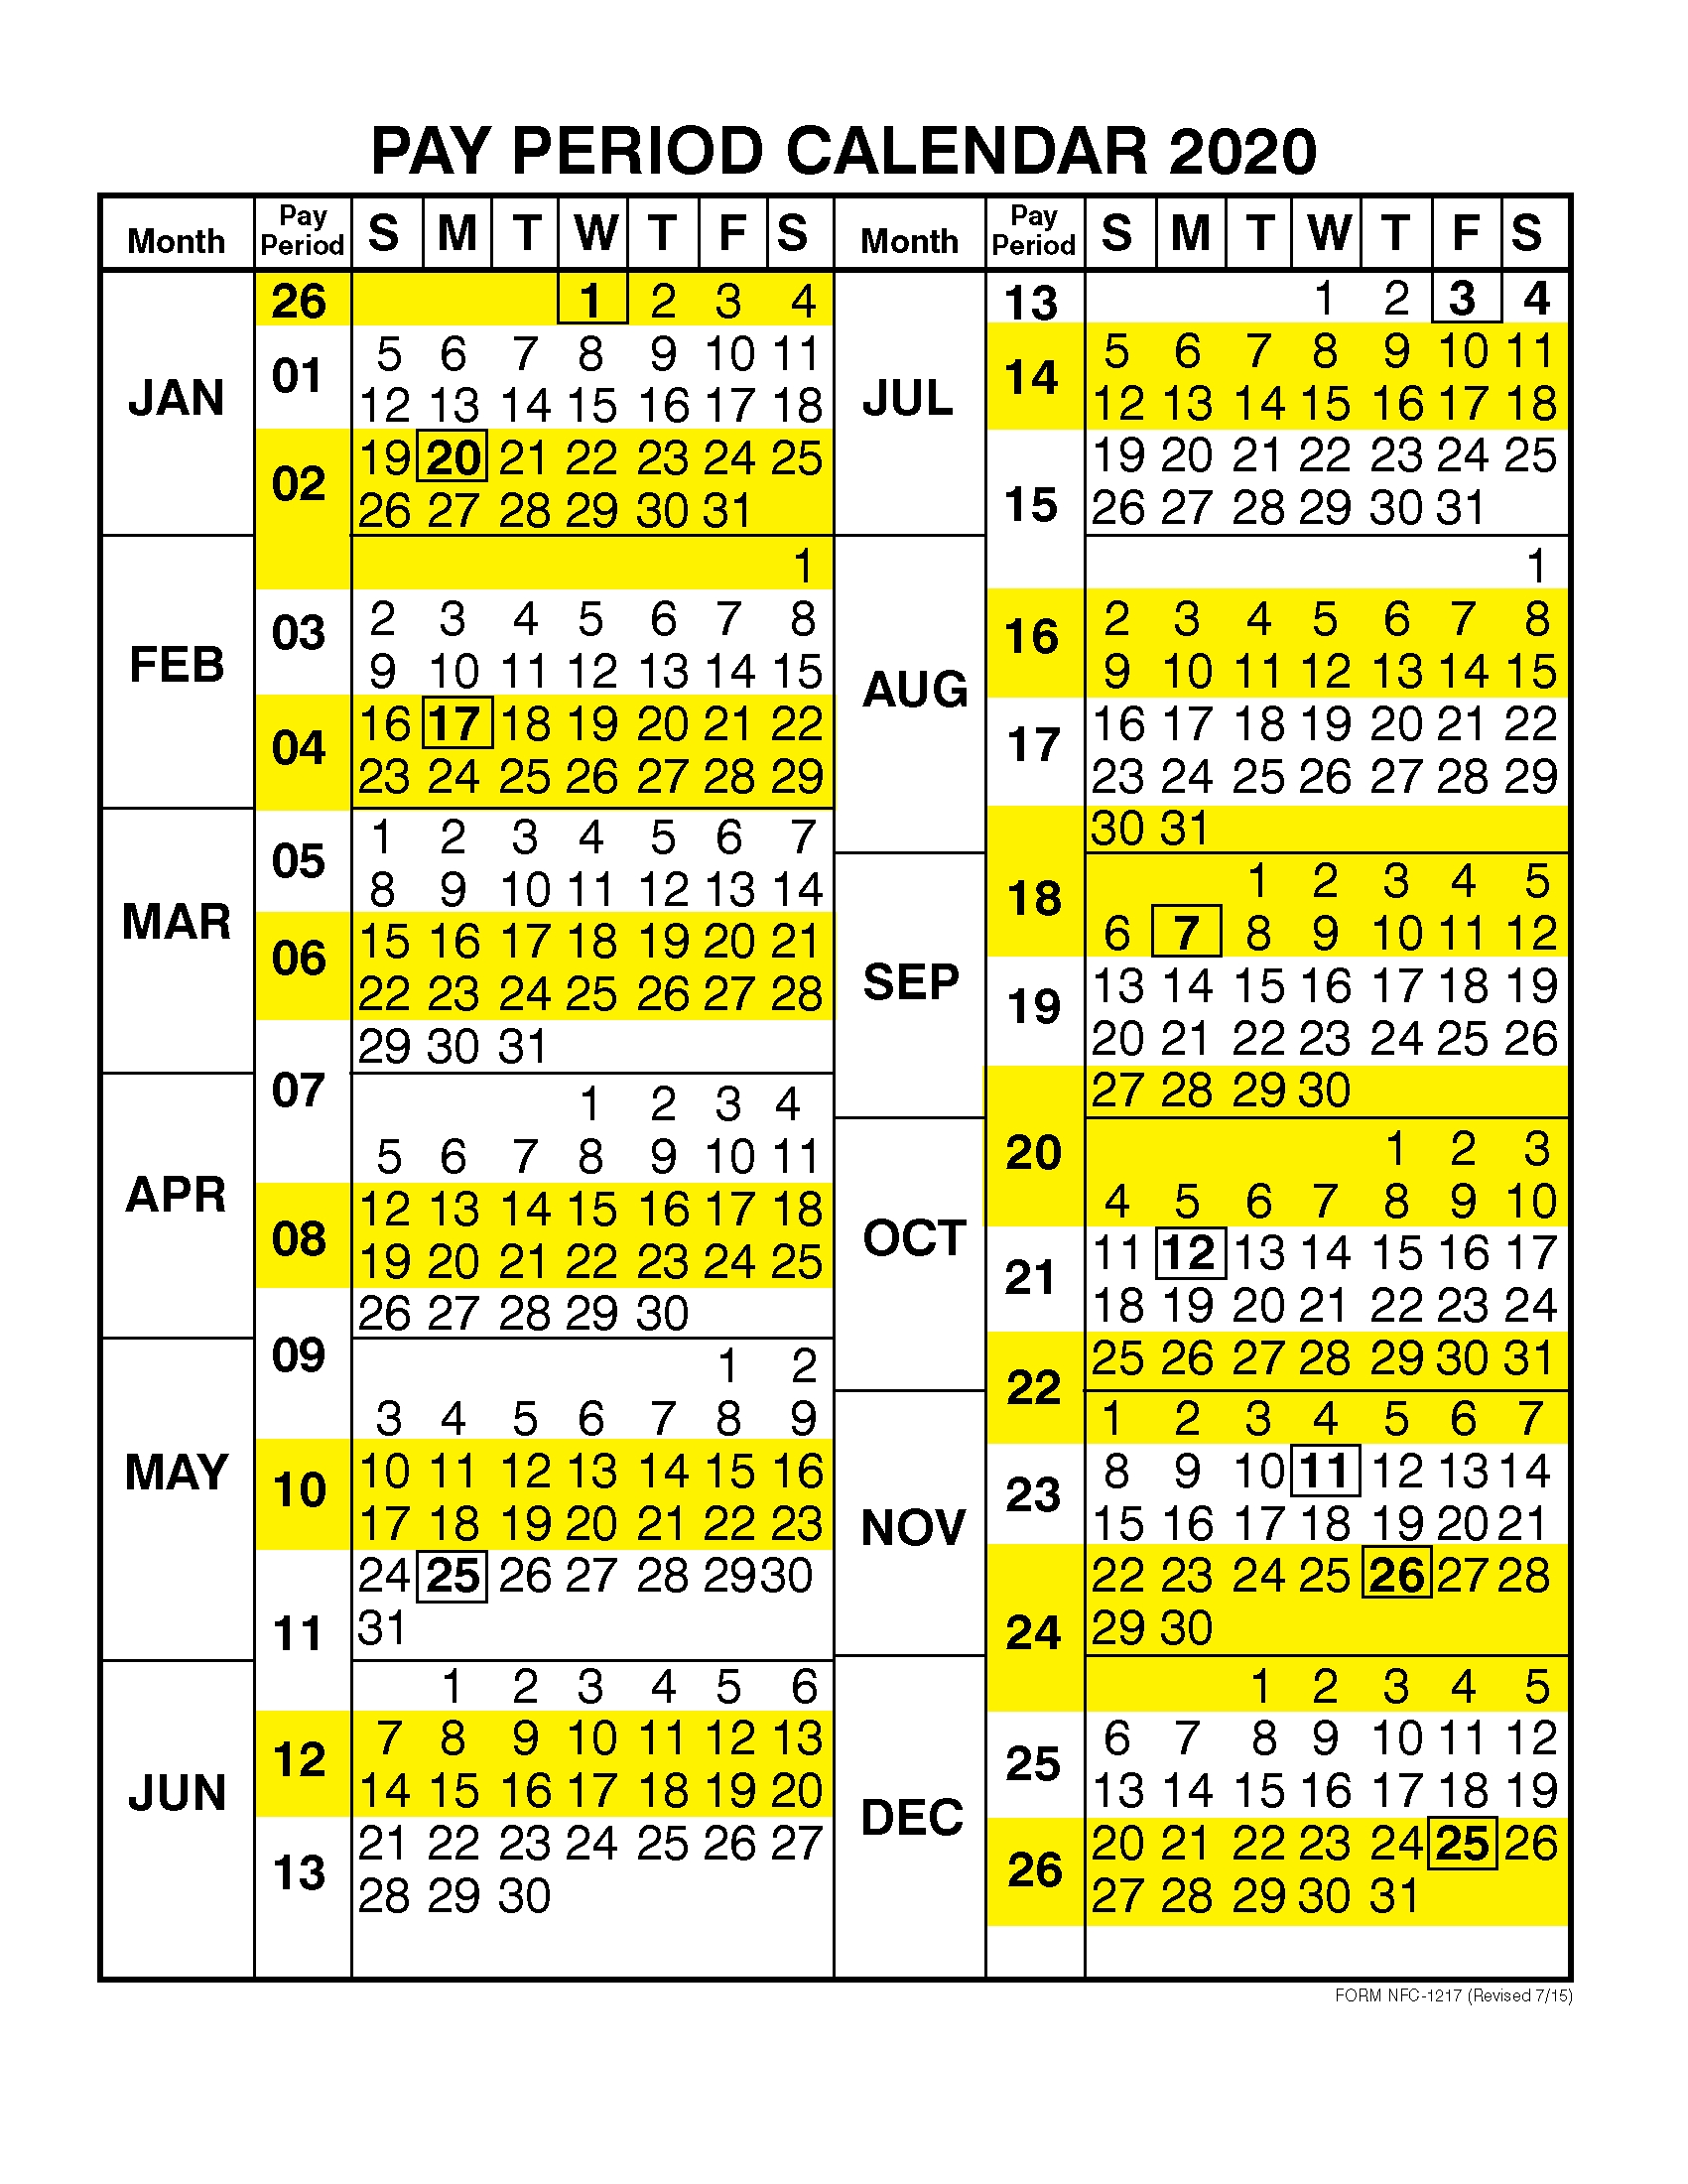 Pay Period Calendar 2020 By Calendar Year Qualads